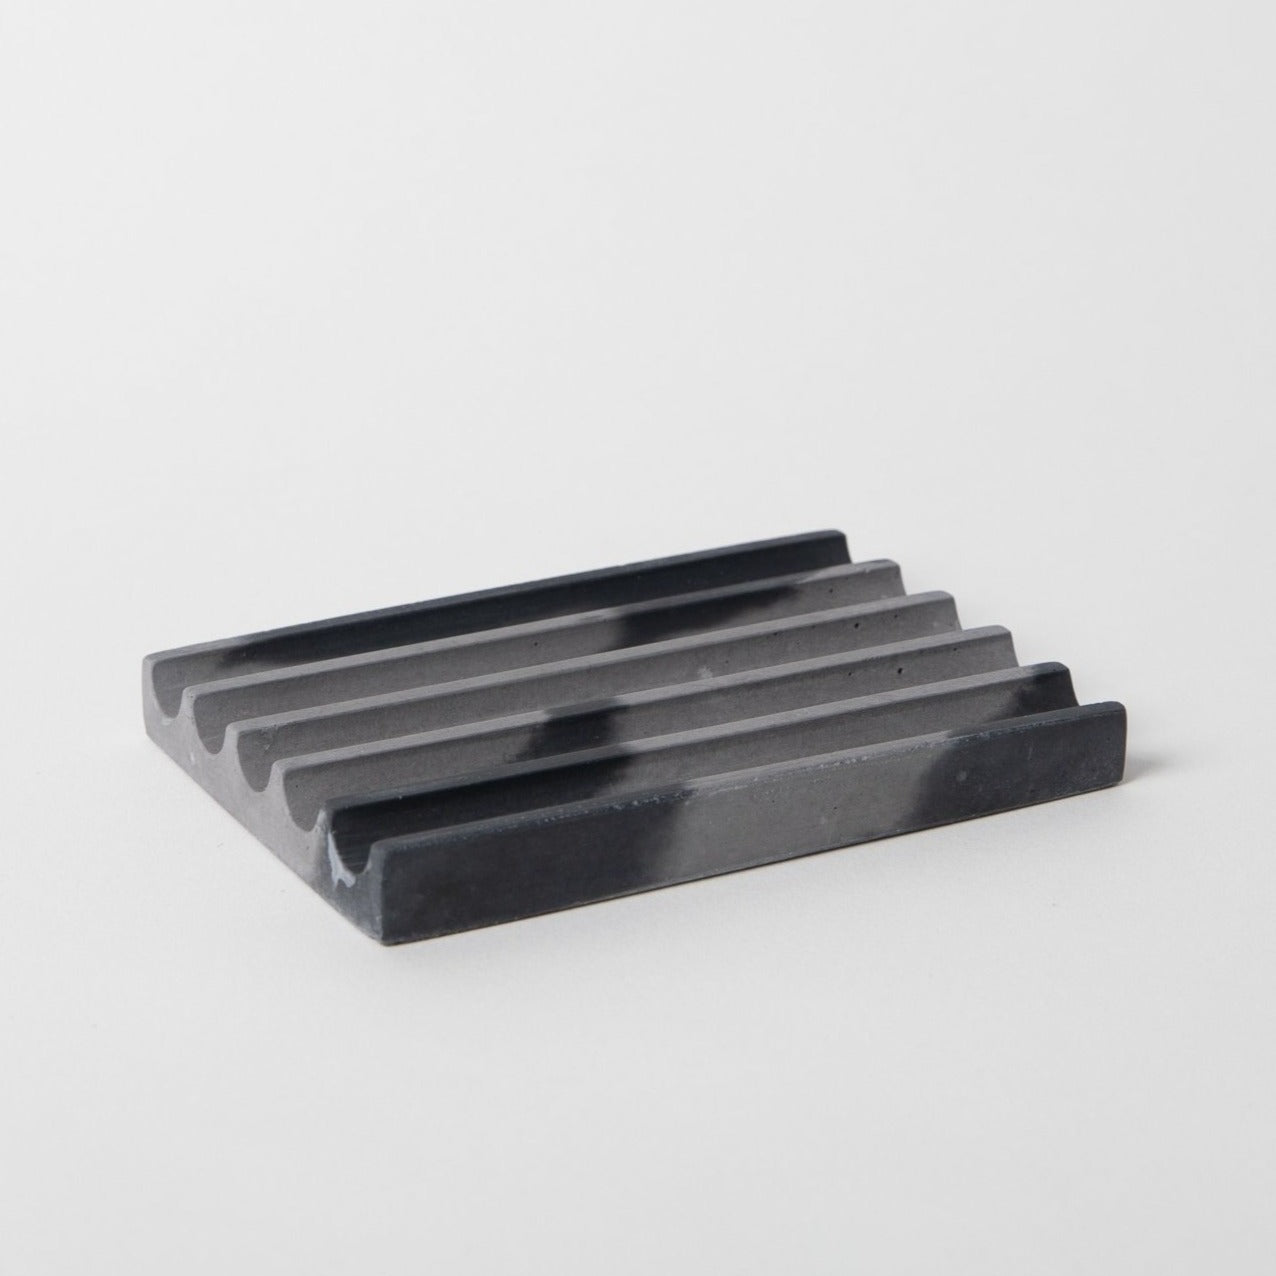 Concrete soap dish in black and grey.